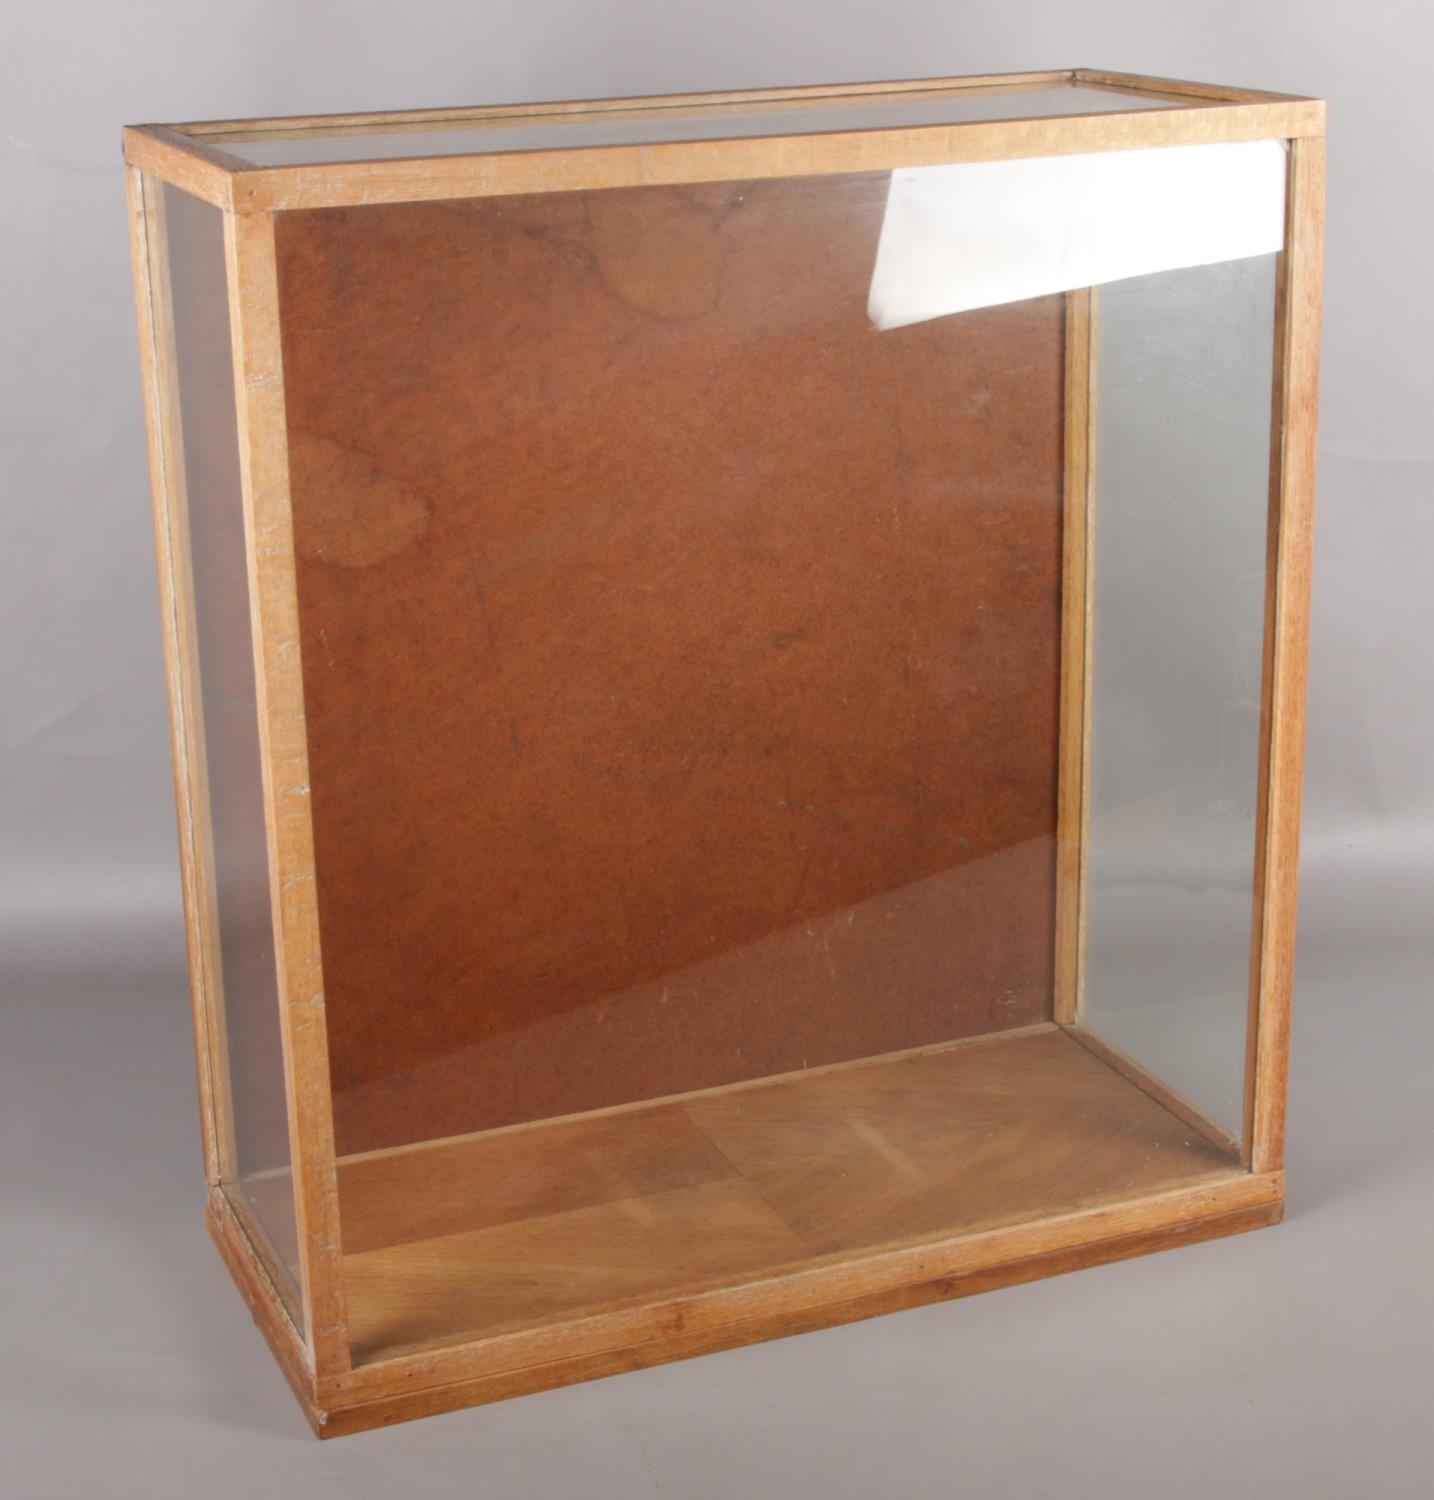 A glass and oak display box. (67cm x 60cm)